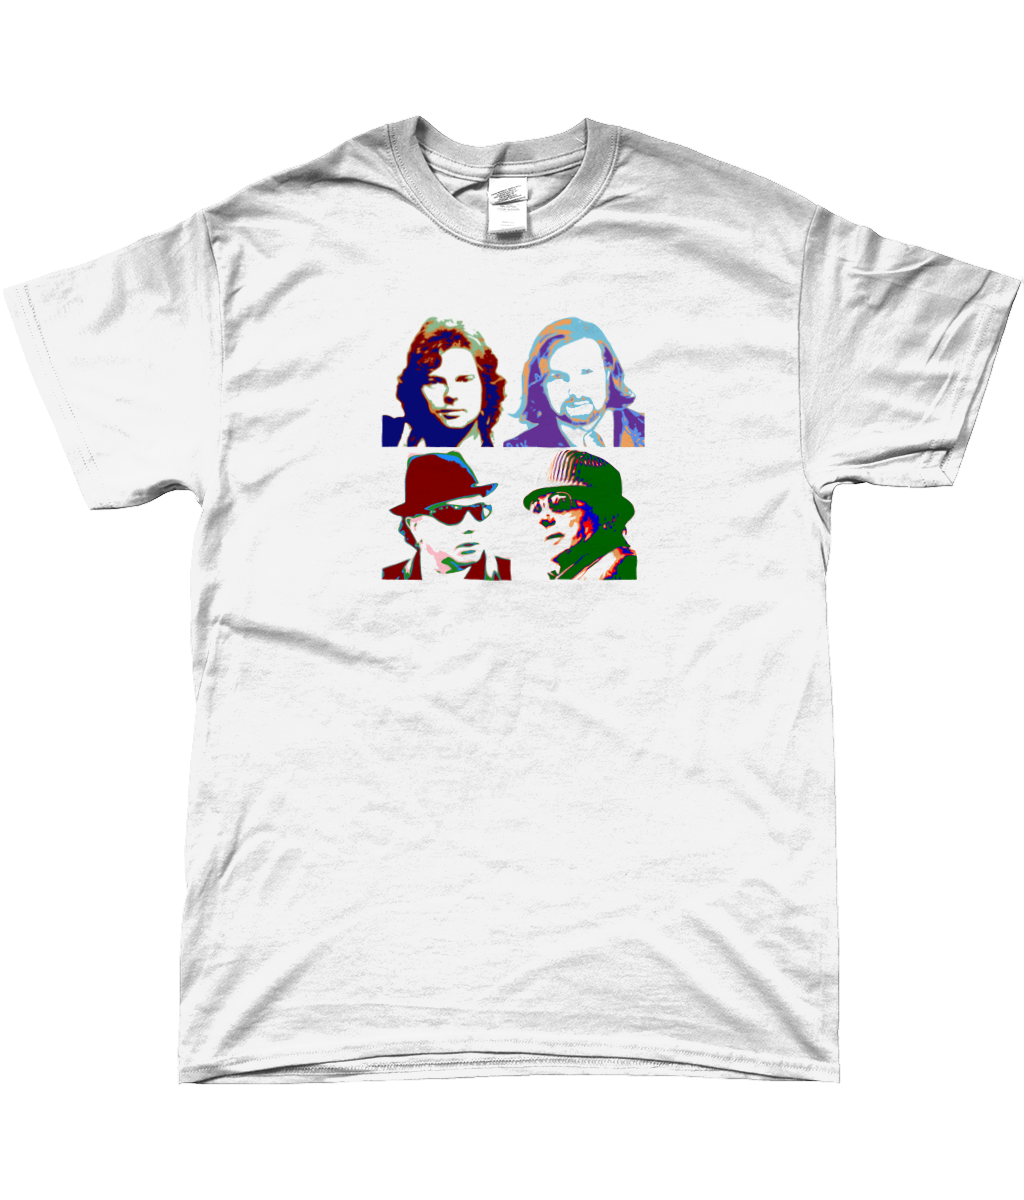 Van Morrison t-shirt